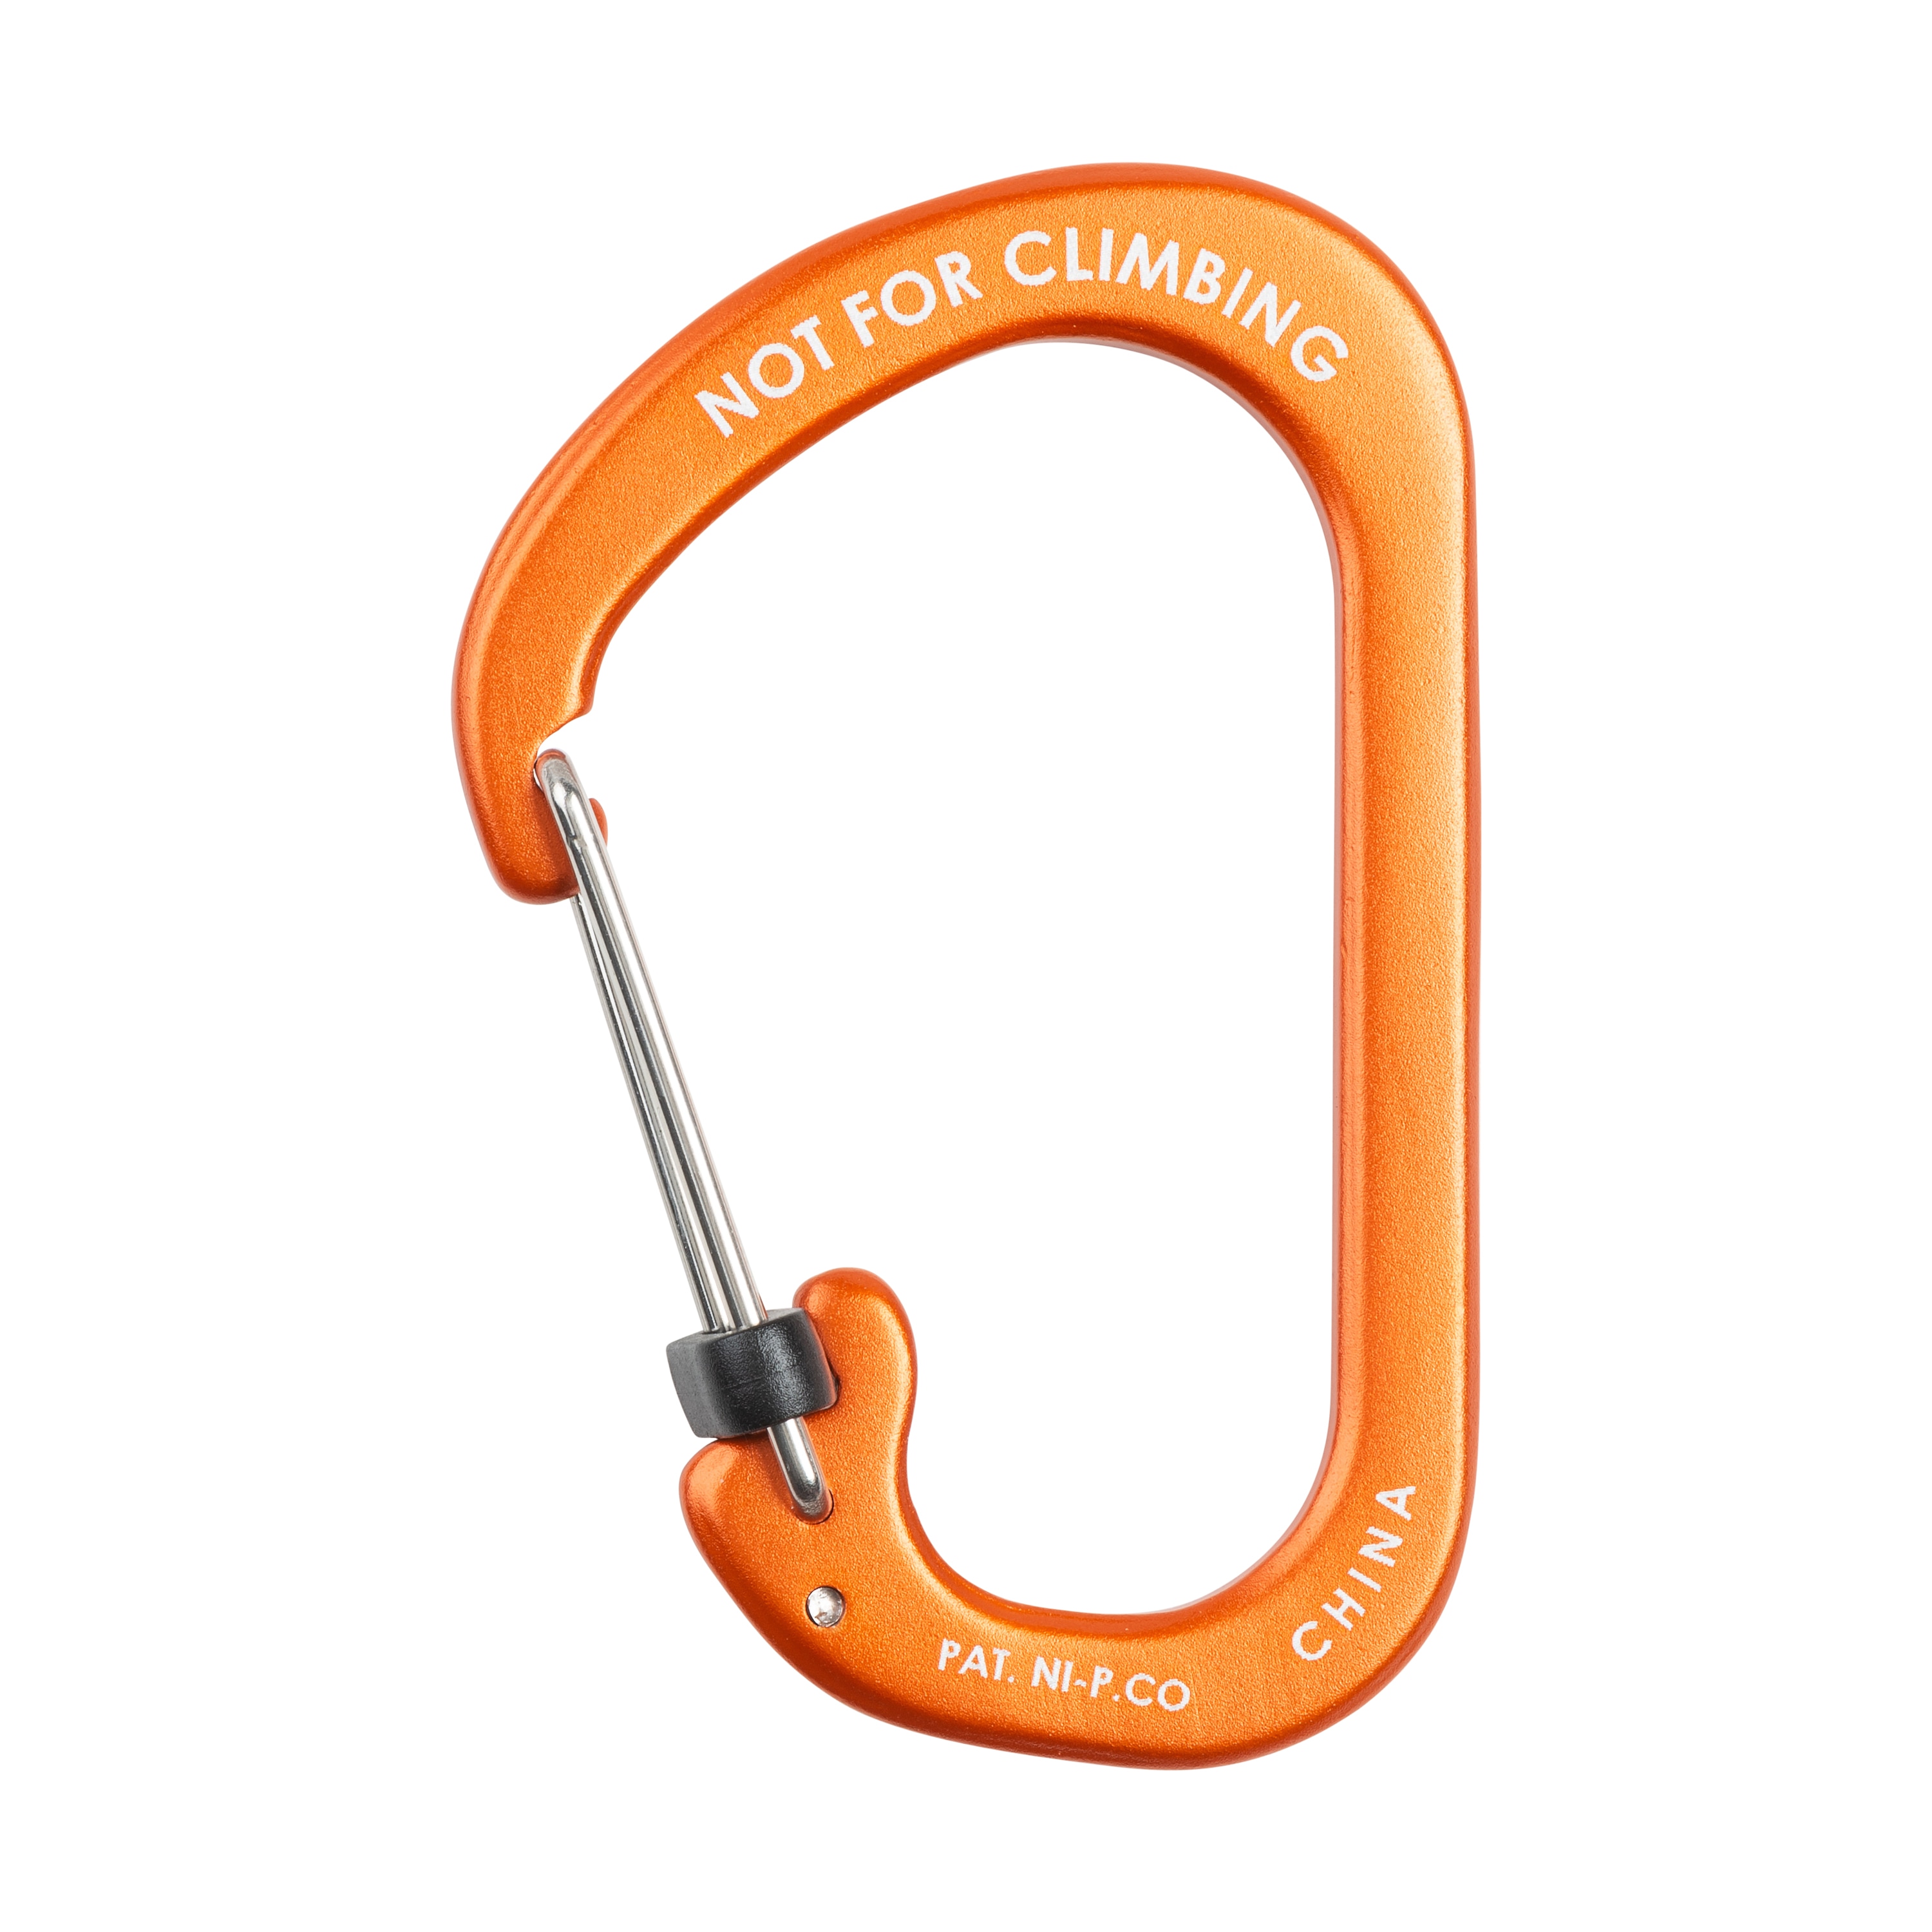 Nite Ize SlideLock Aluminum Key Ring Carabiner - Orange